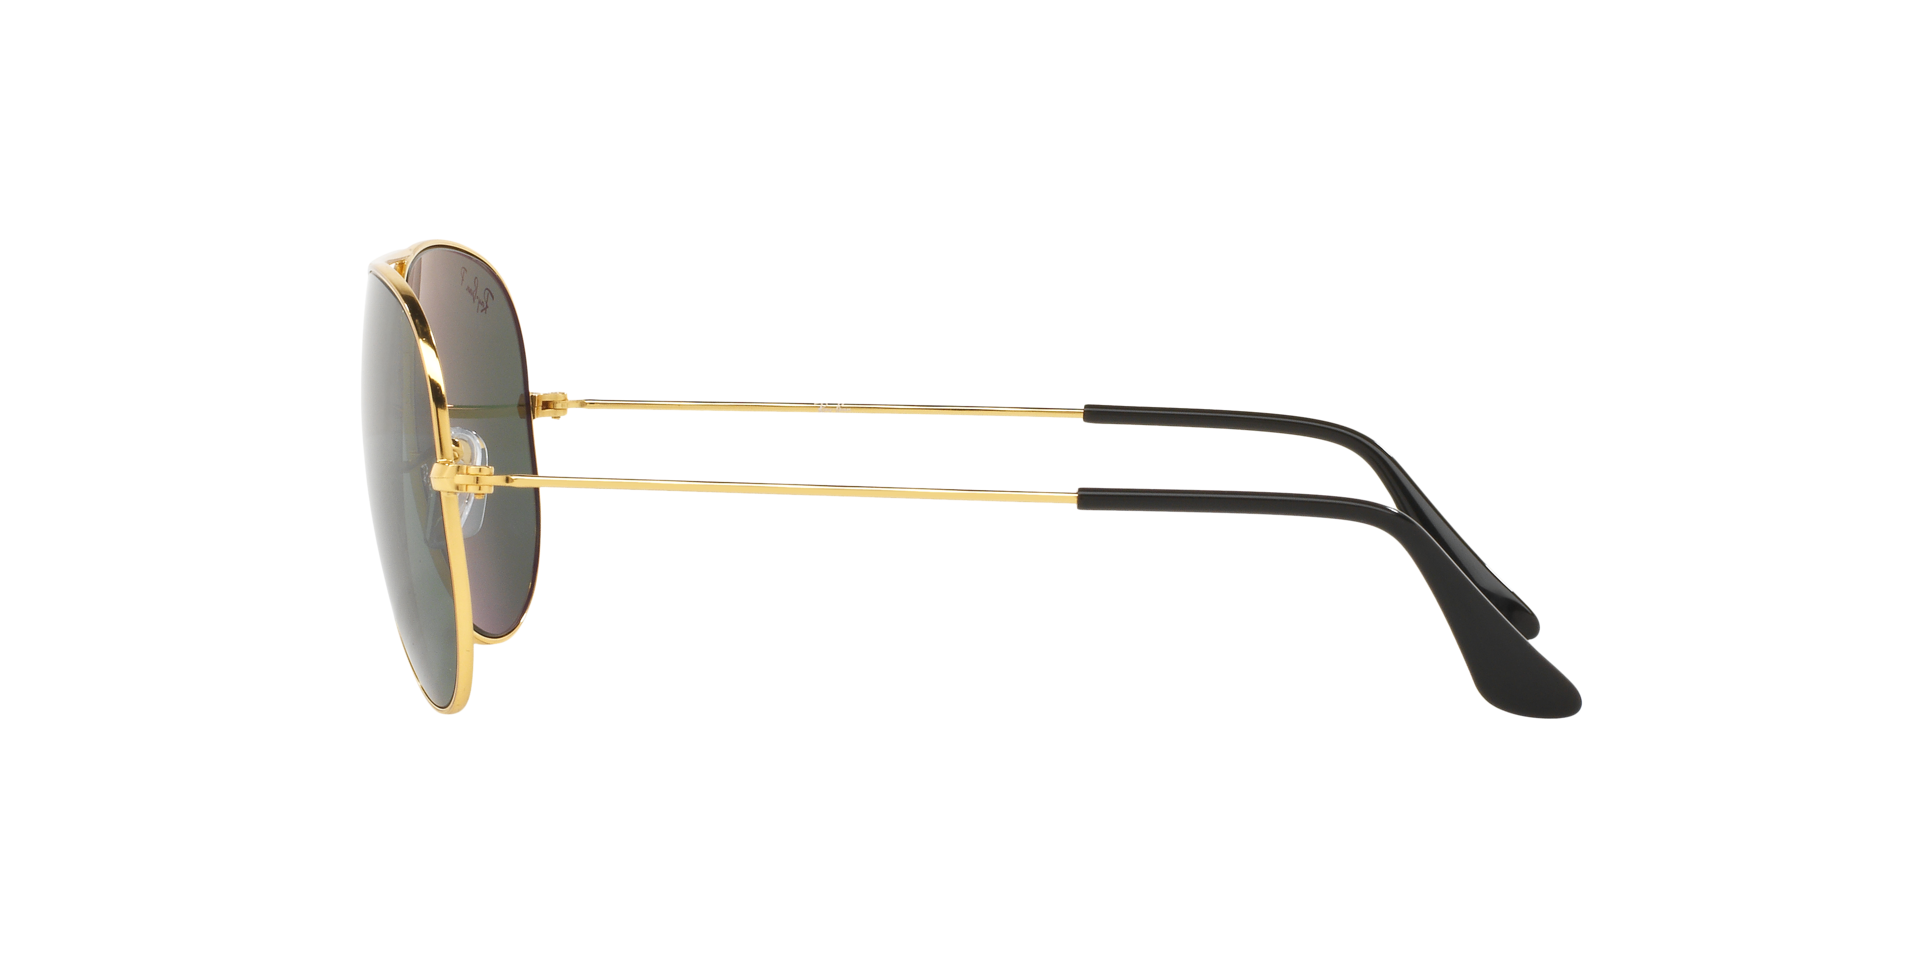 Buy Best Ray-Ban Aviator Classic Sunglasses Online